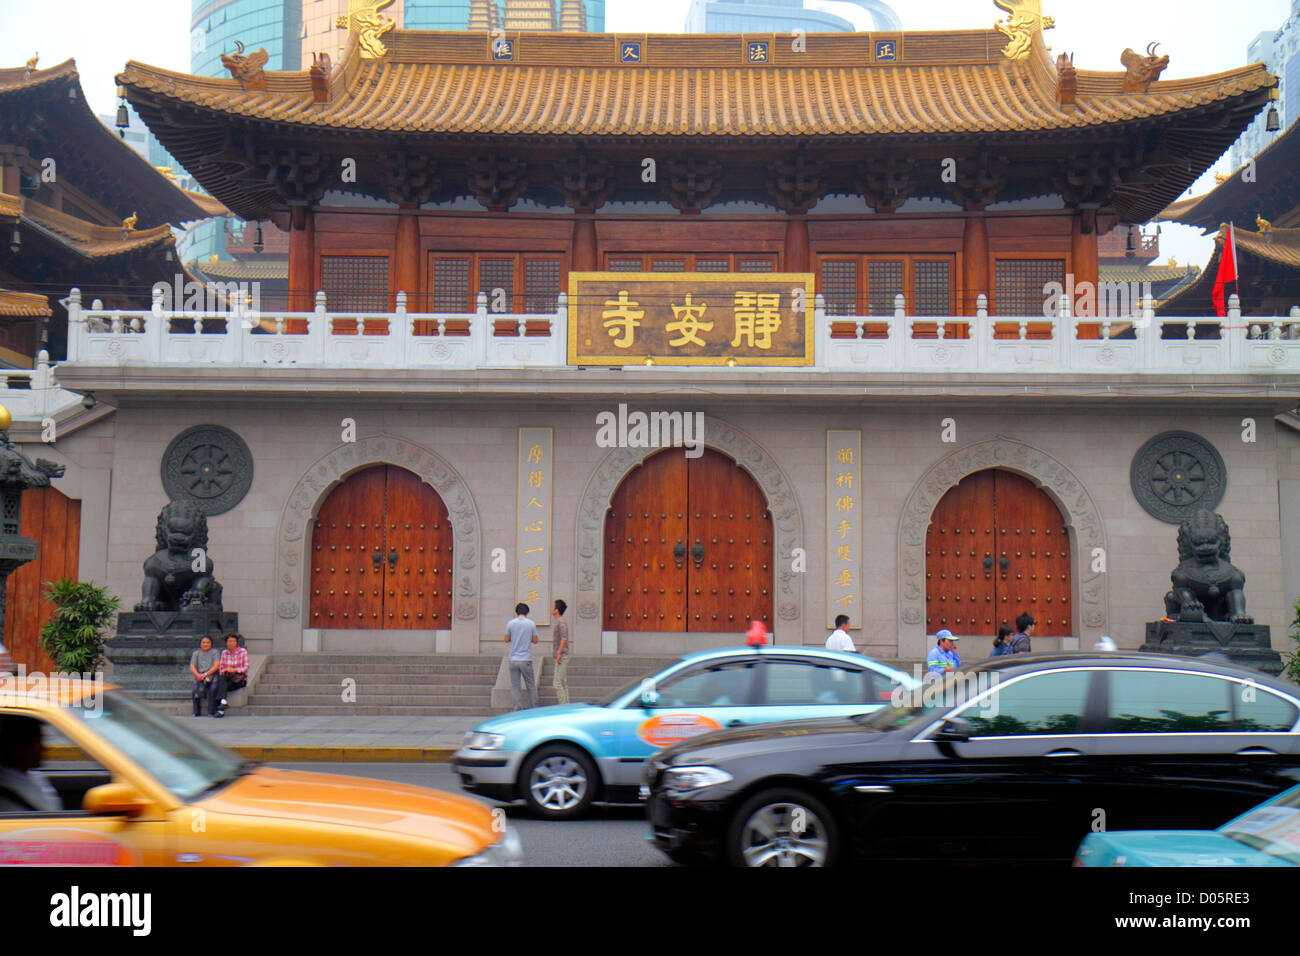 Shanghai China,Chinese Jing'an District,Nanjing Road West,Jing'an Temple,Buddhist,traffic,Mandarin,hanzi,characters,symbols,China121005090 Stock Photo